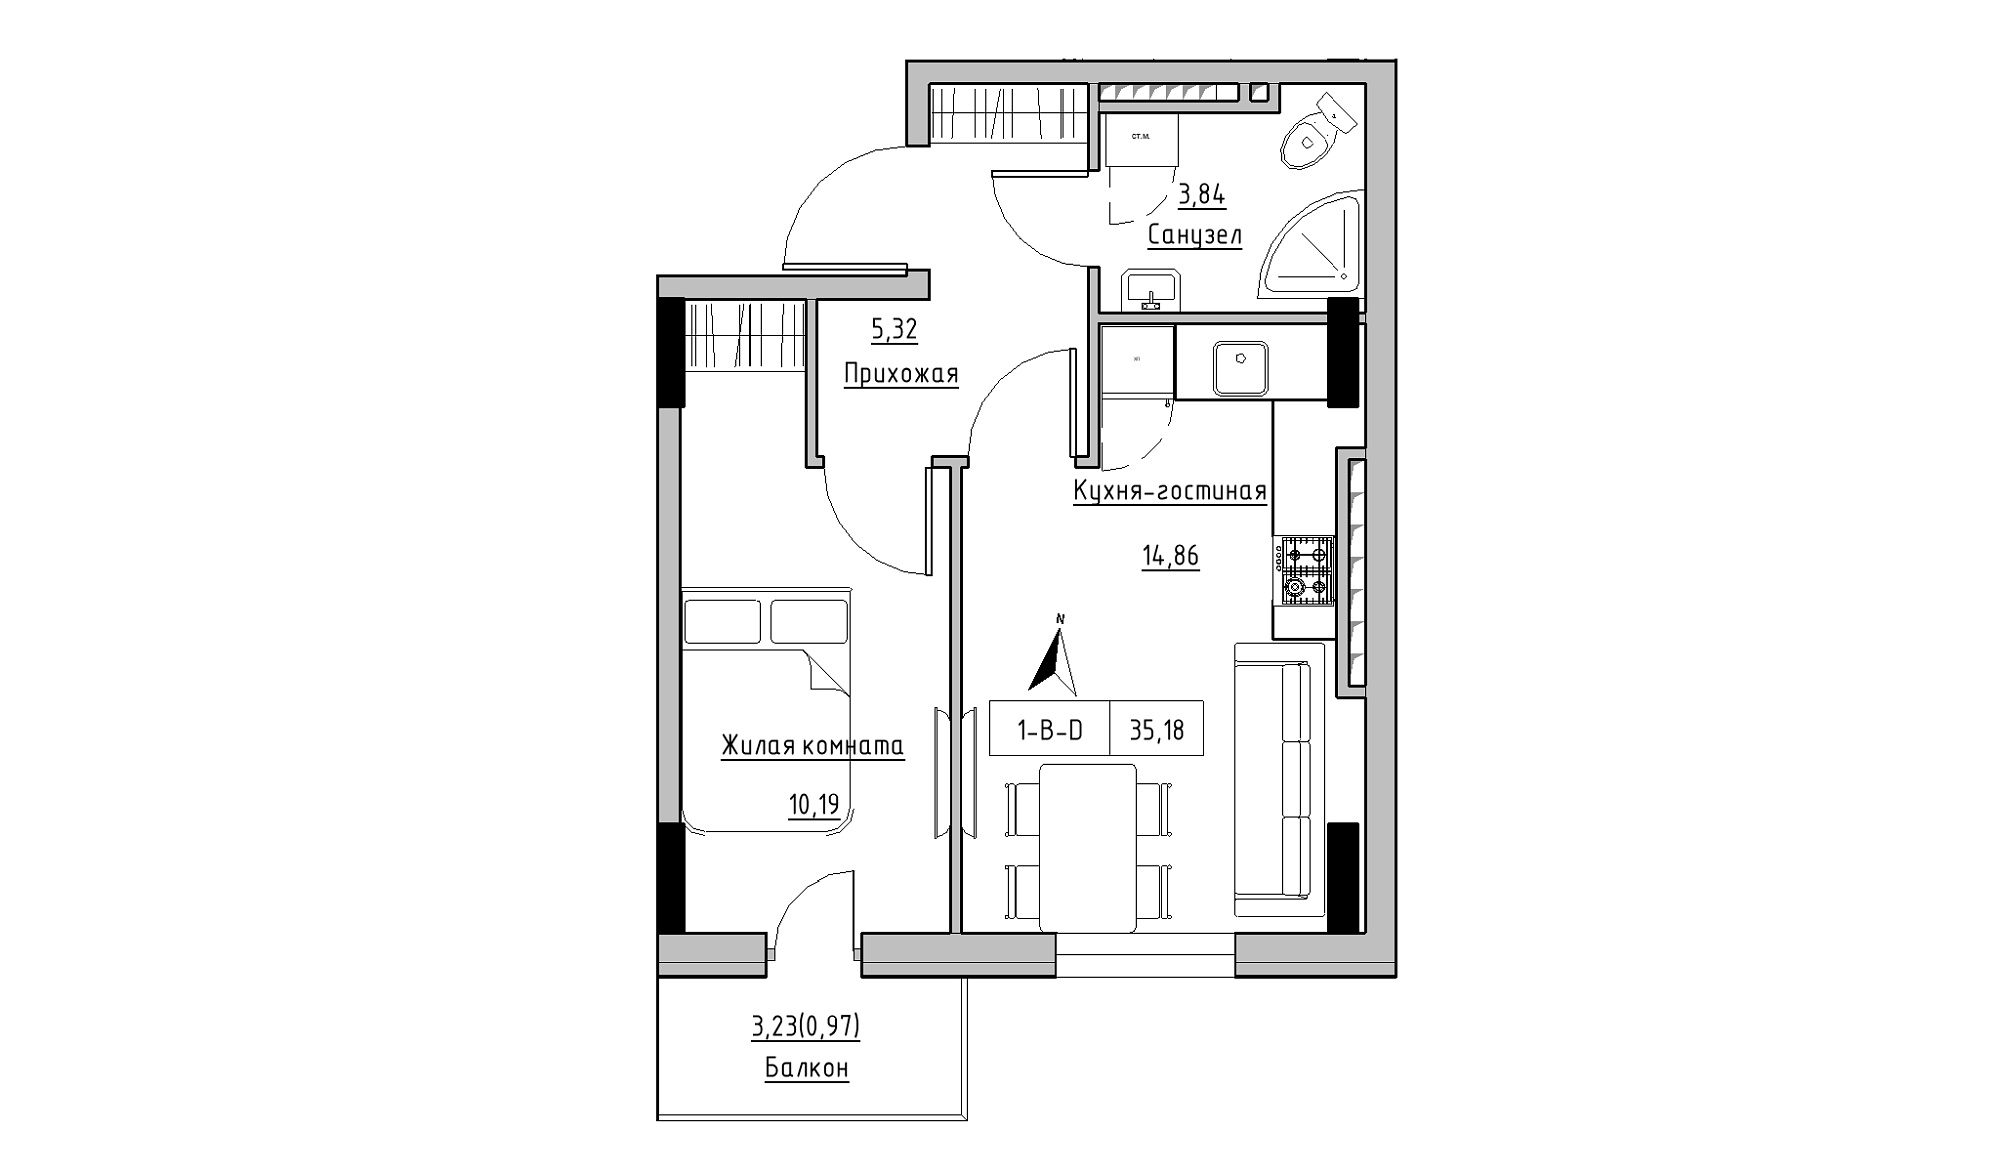 Planning 1-rm flats area 35.18m2, KS-025-06/0012.